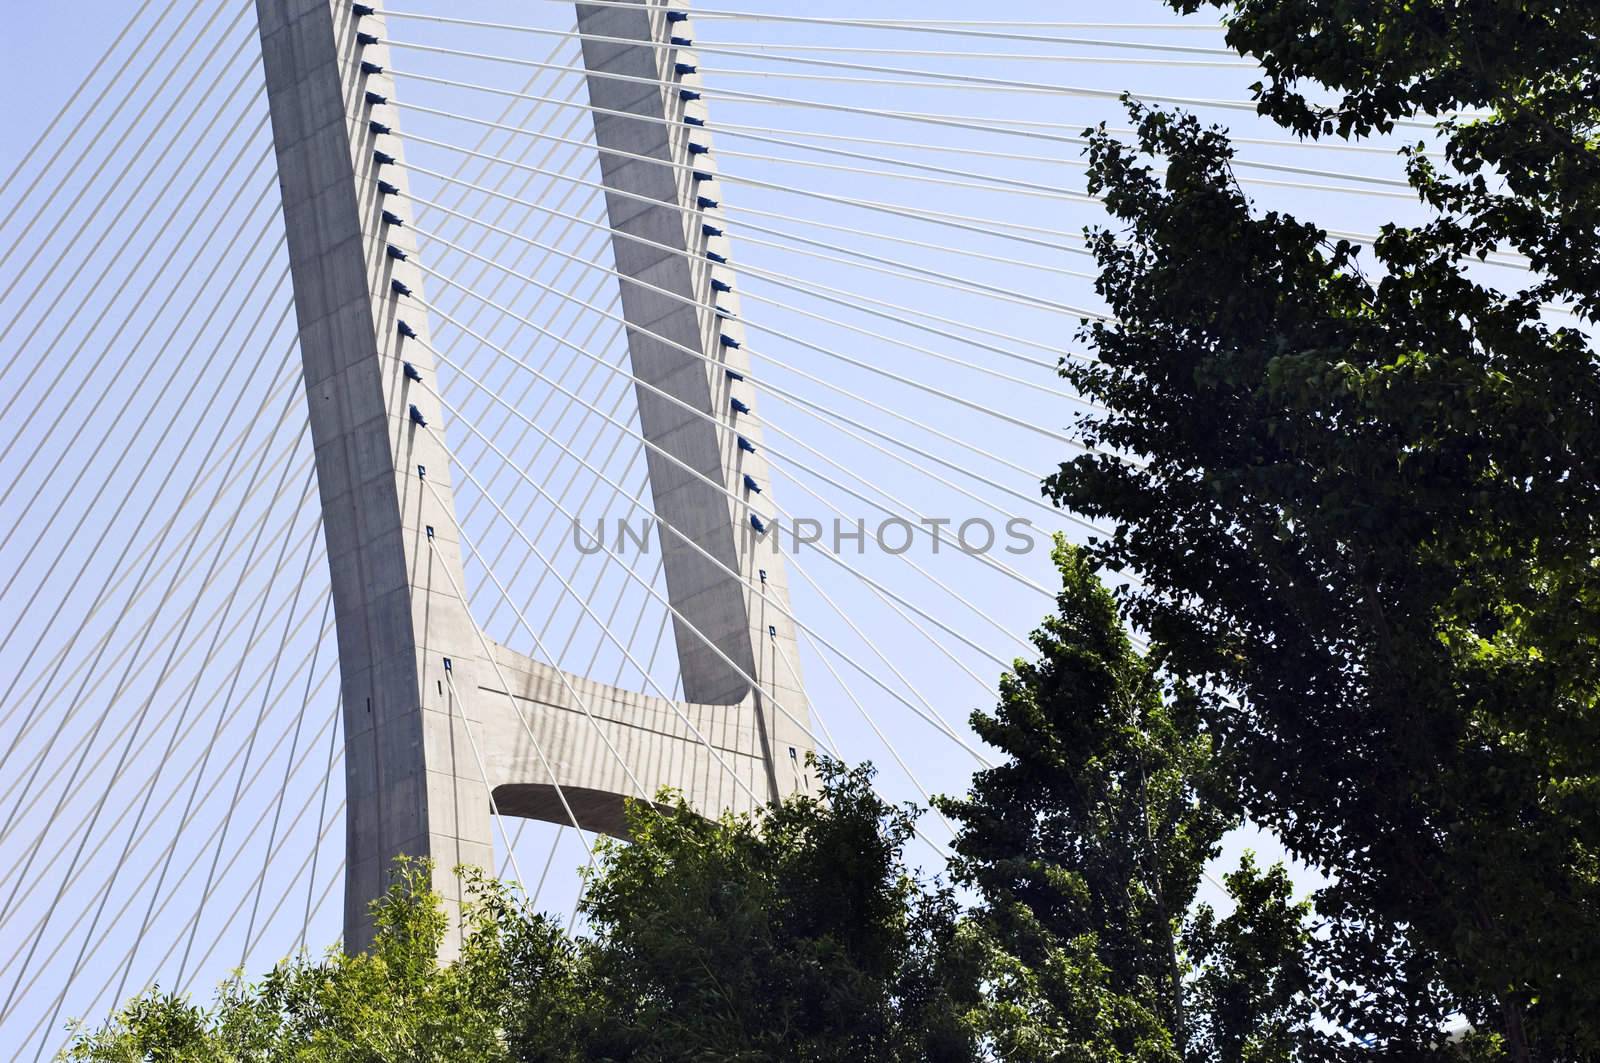 Suspension bridge by mrfotos